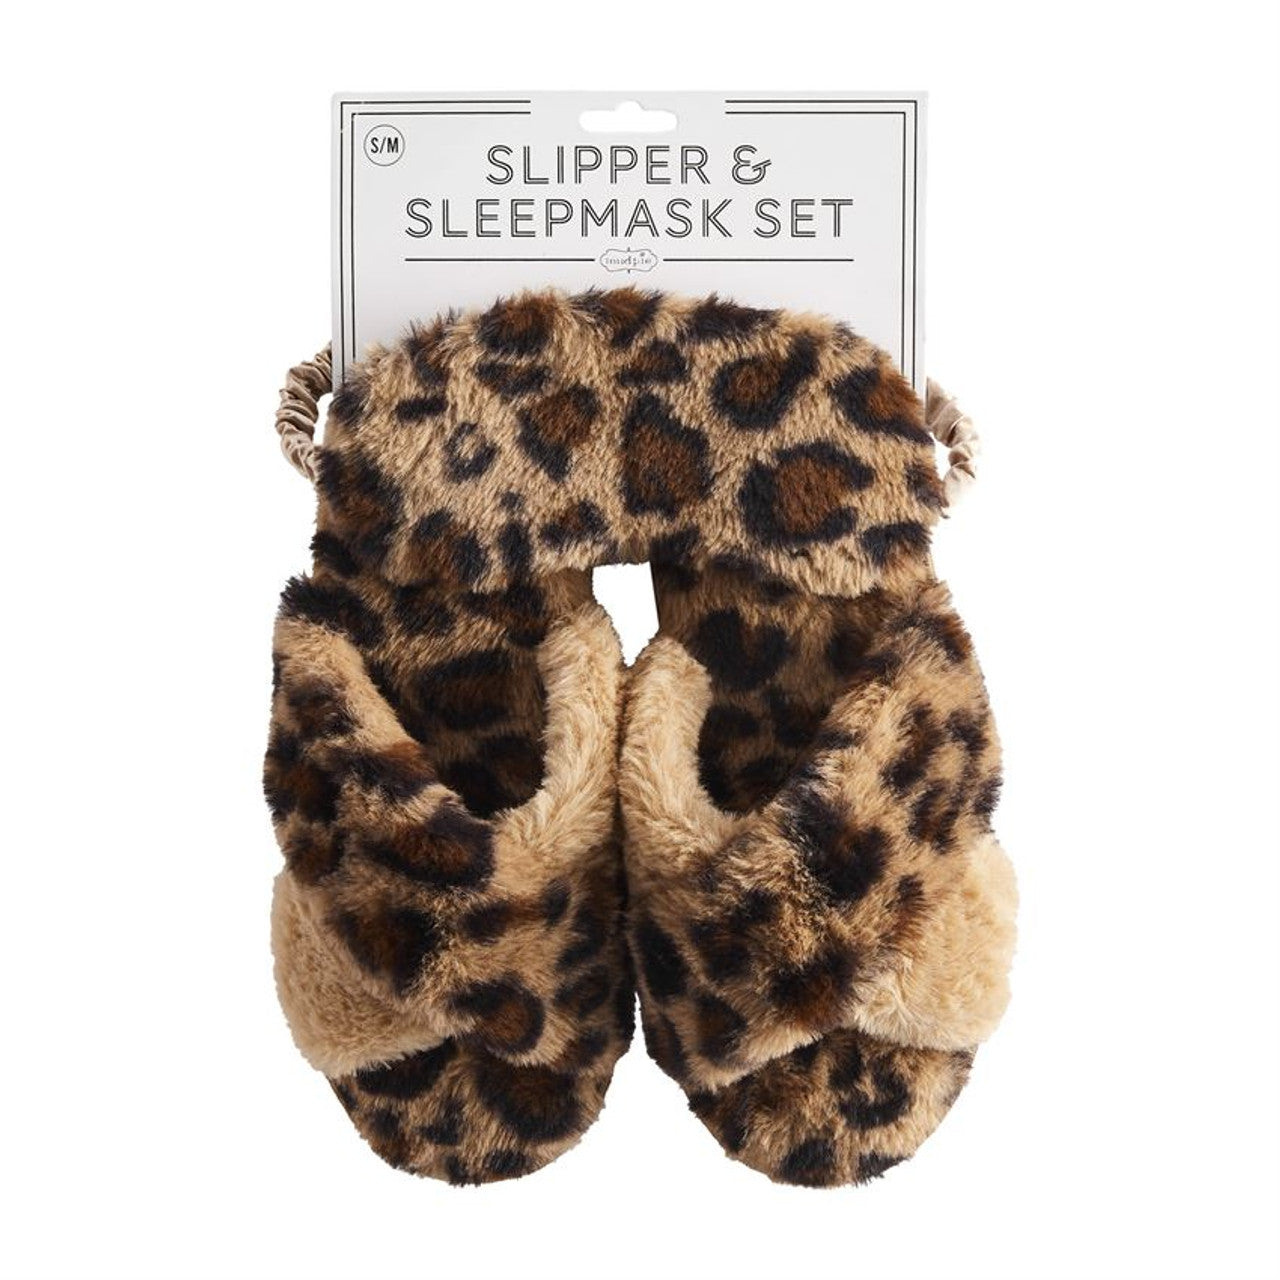 Tan leopard slipper and sleep mask set.